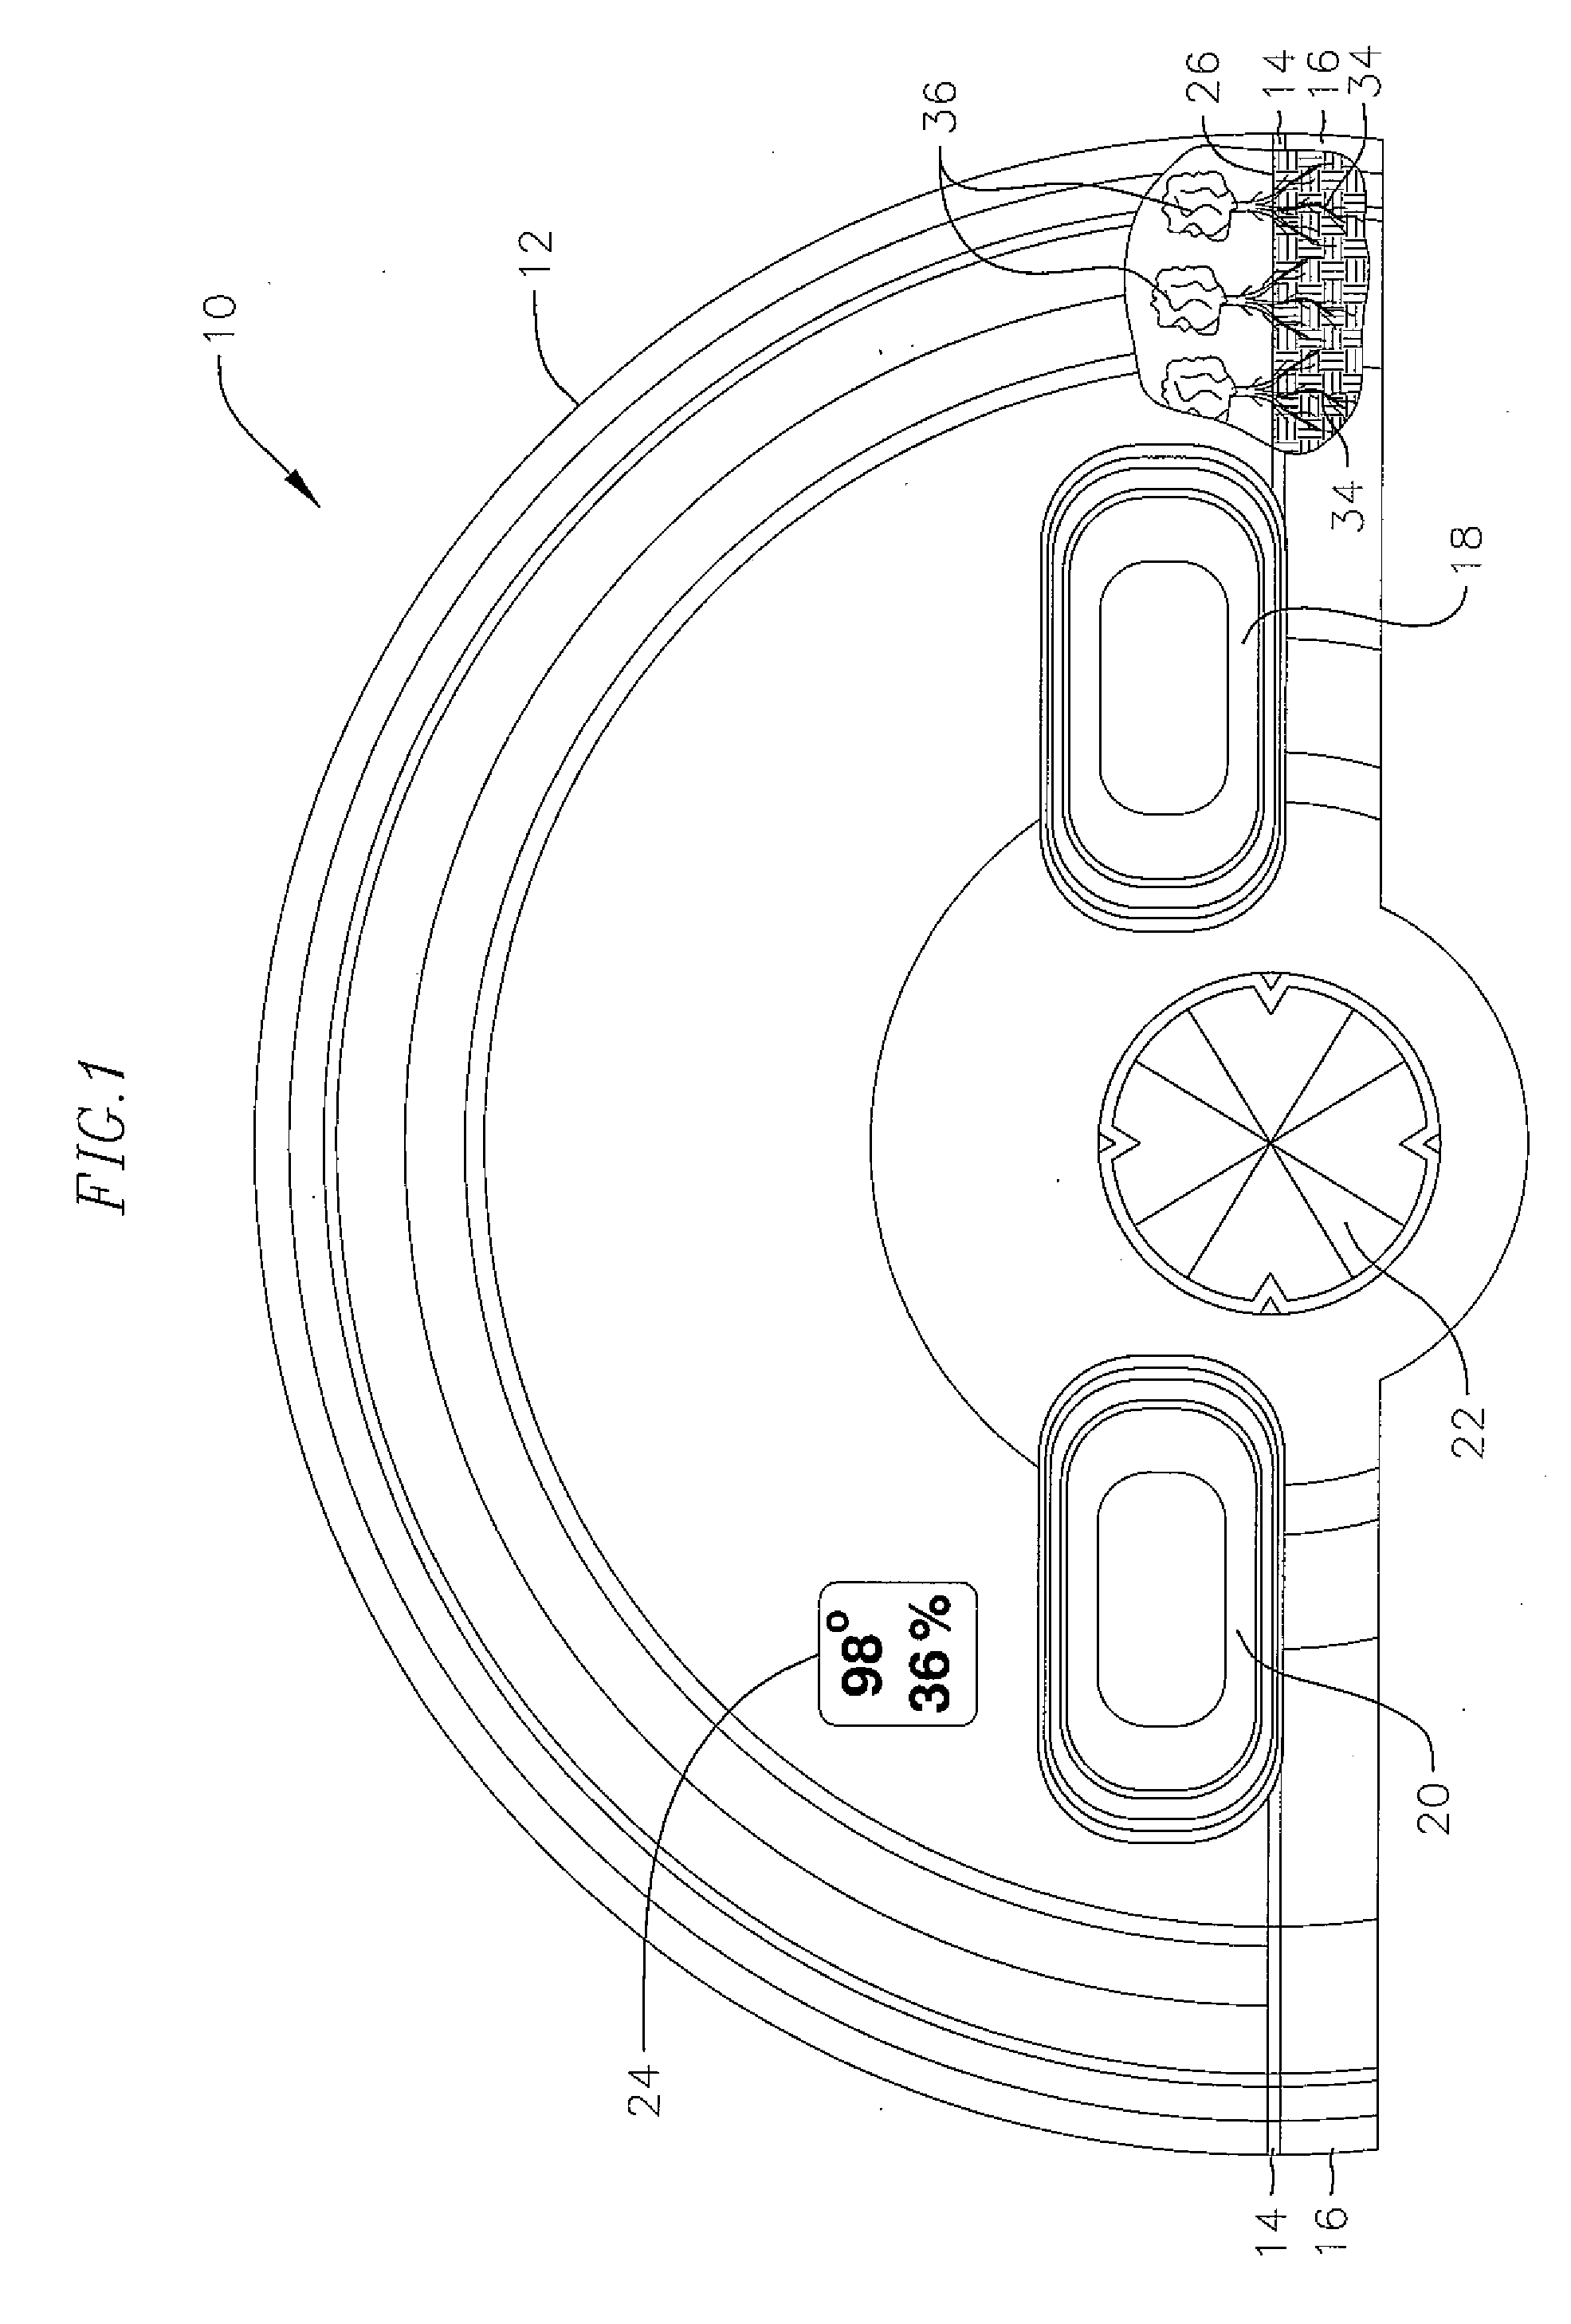 Hydroponic device having transparent propagation tray